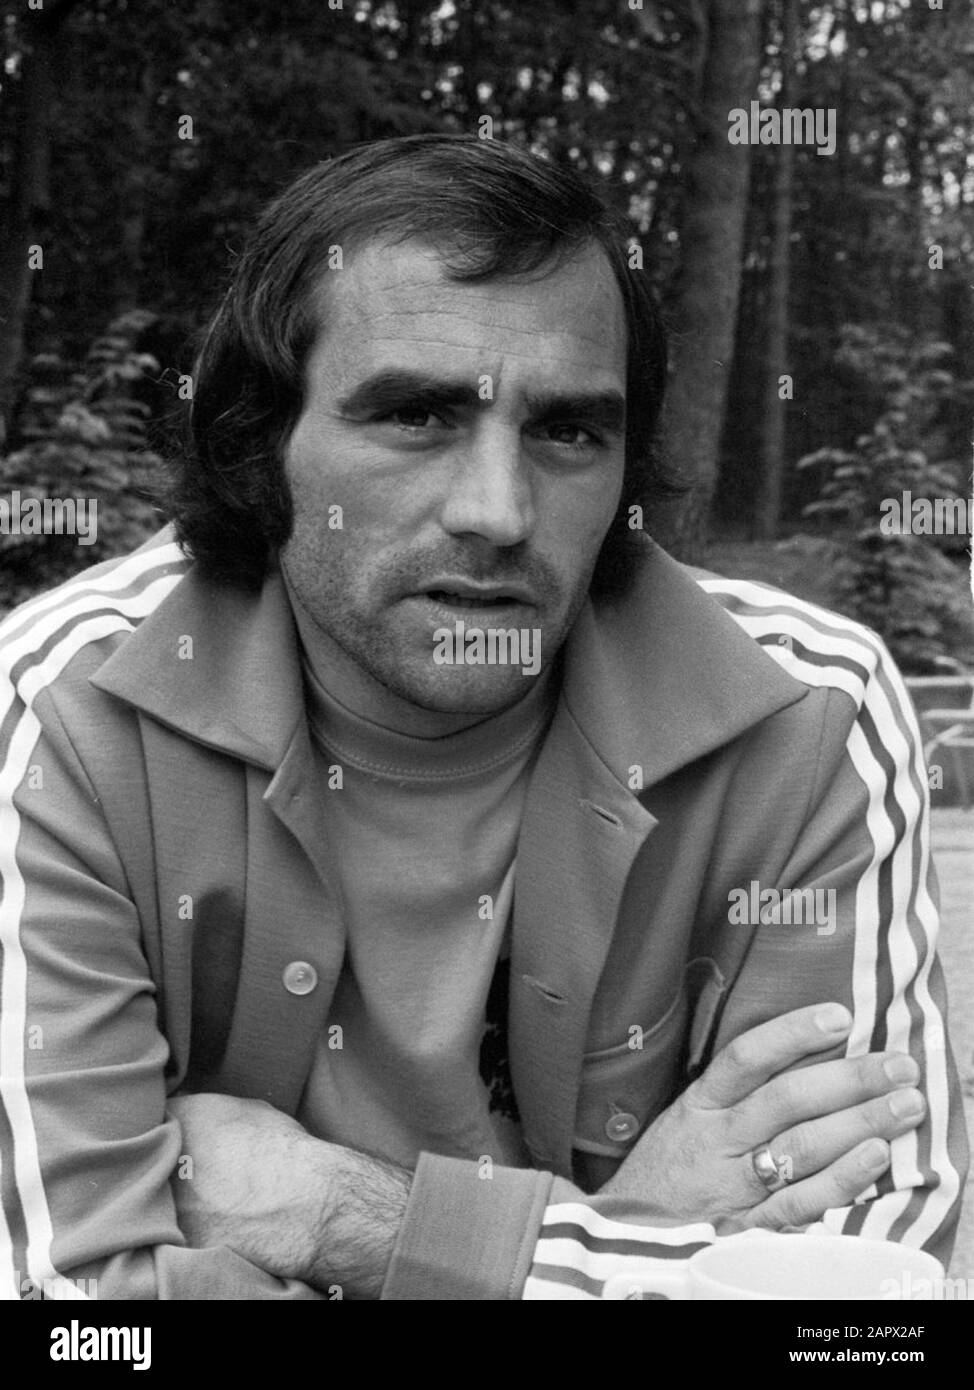 Dutch team selection for 1974 World Cup in Zeist; Pleun Strik.; Stock Photo